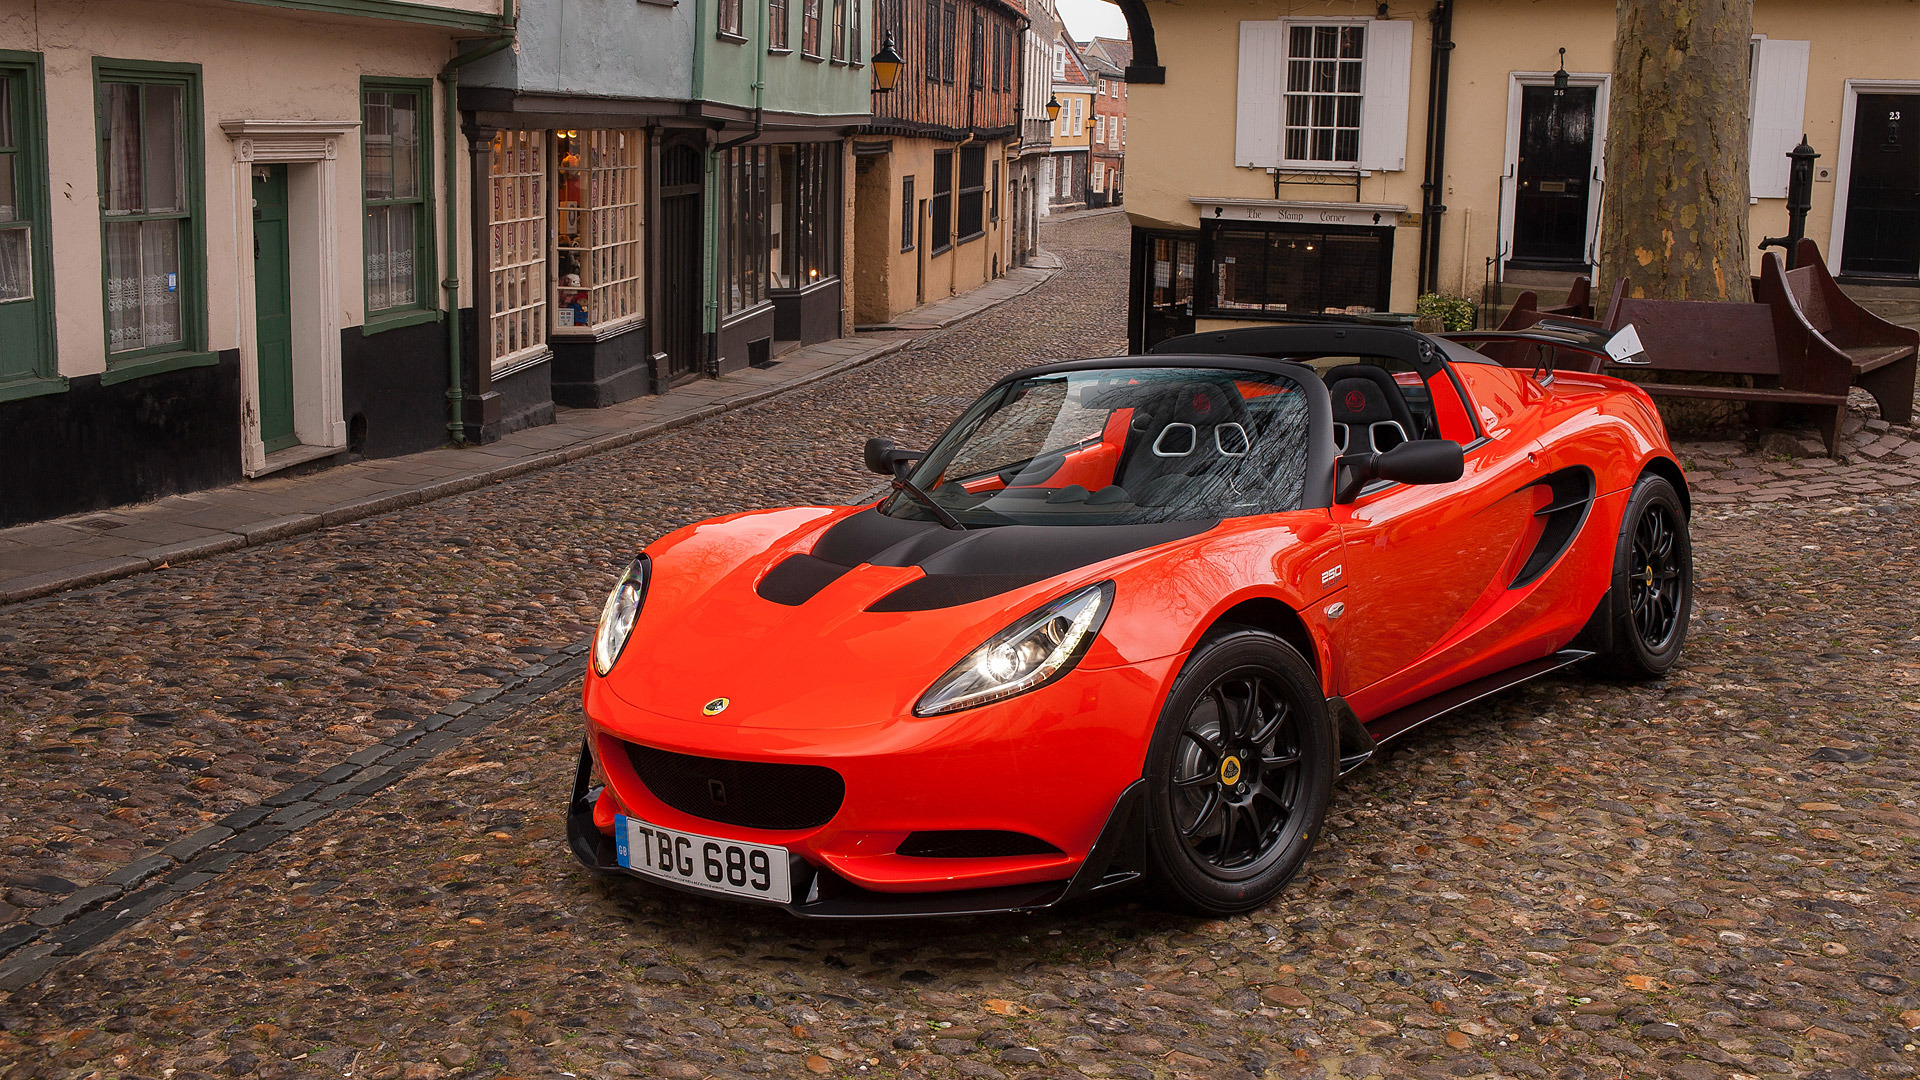 Lotus Elise, Car, Vehicle, Town Wallpapers HD / Desktop and Mobile Backgrou...